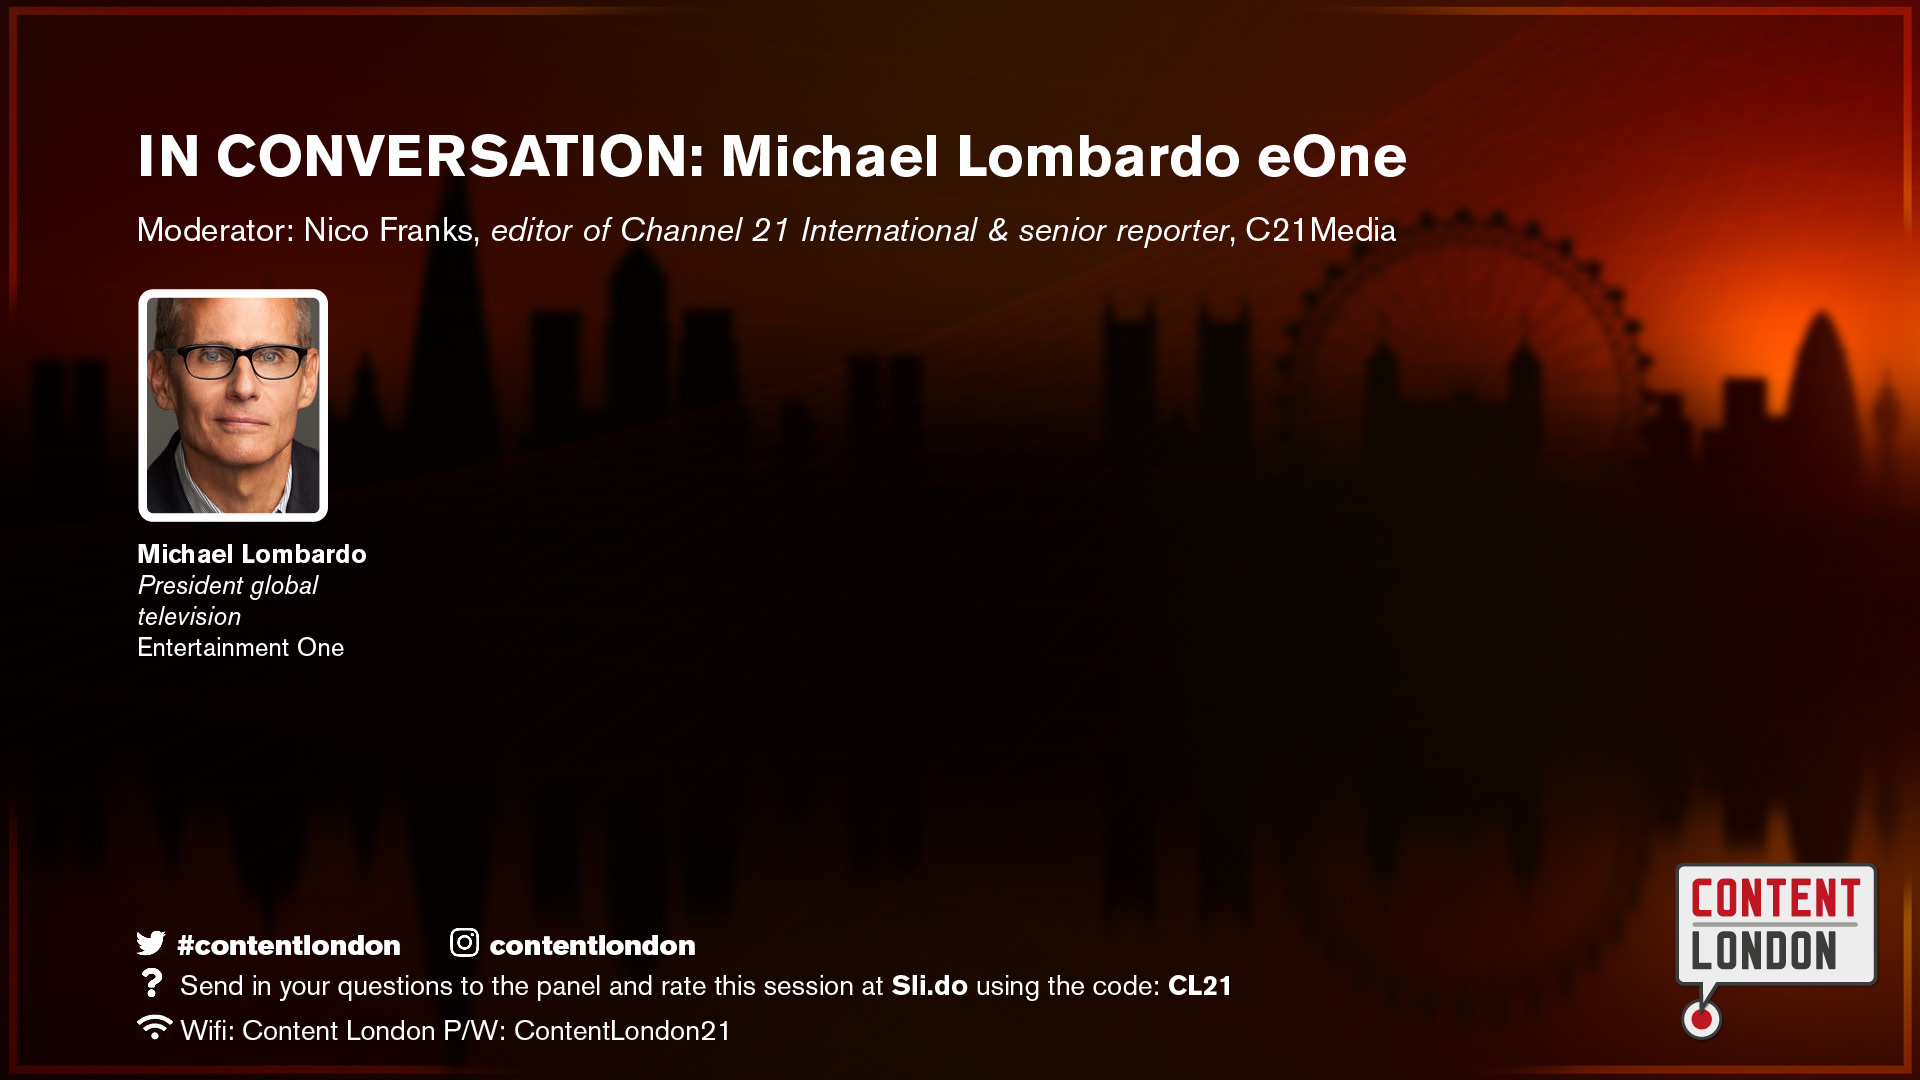 IN CONVERSATION: Michael Lombardo, eOne